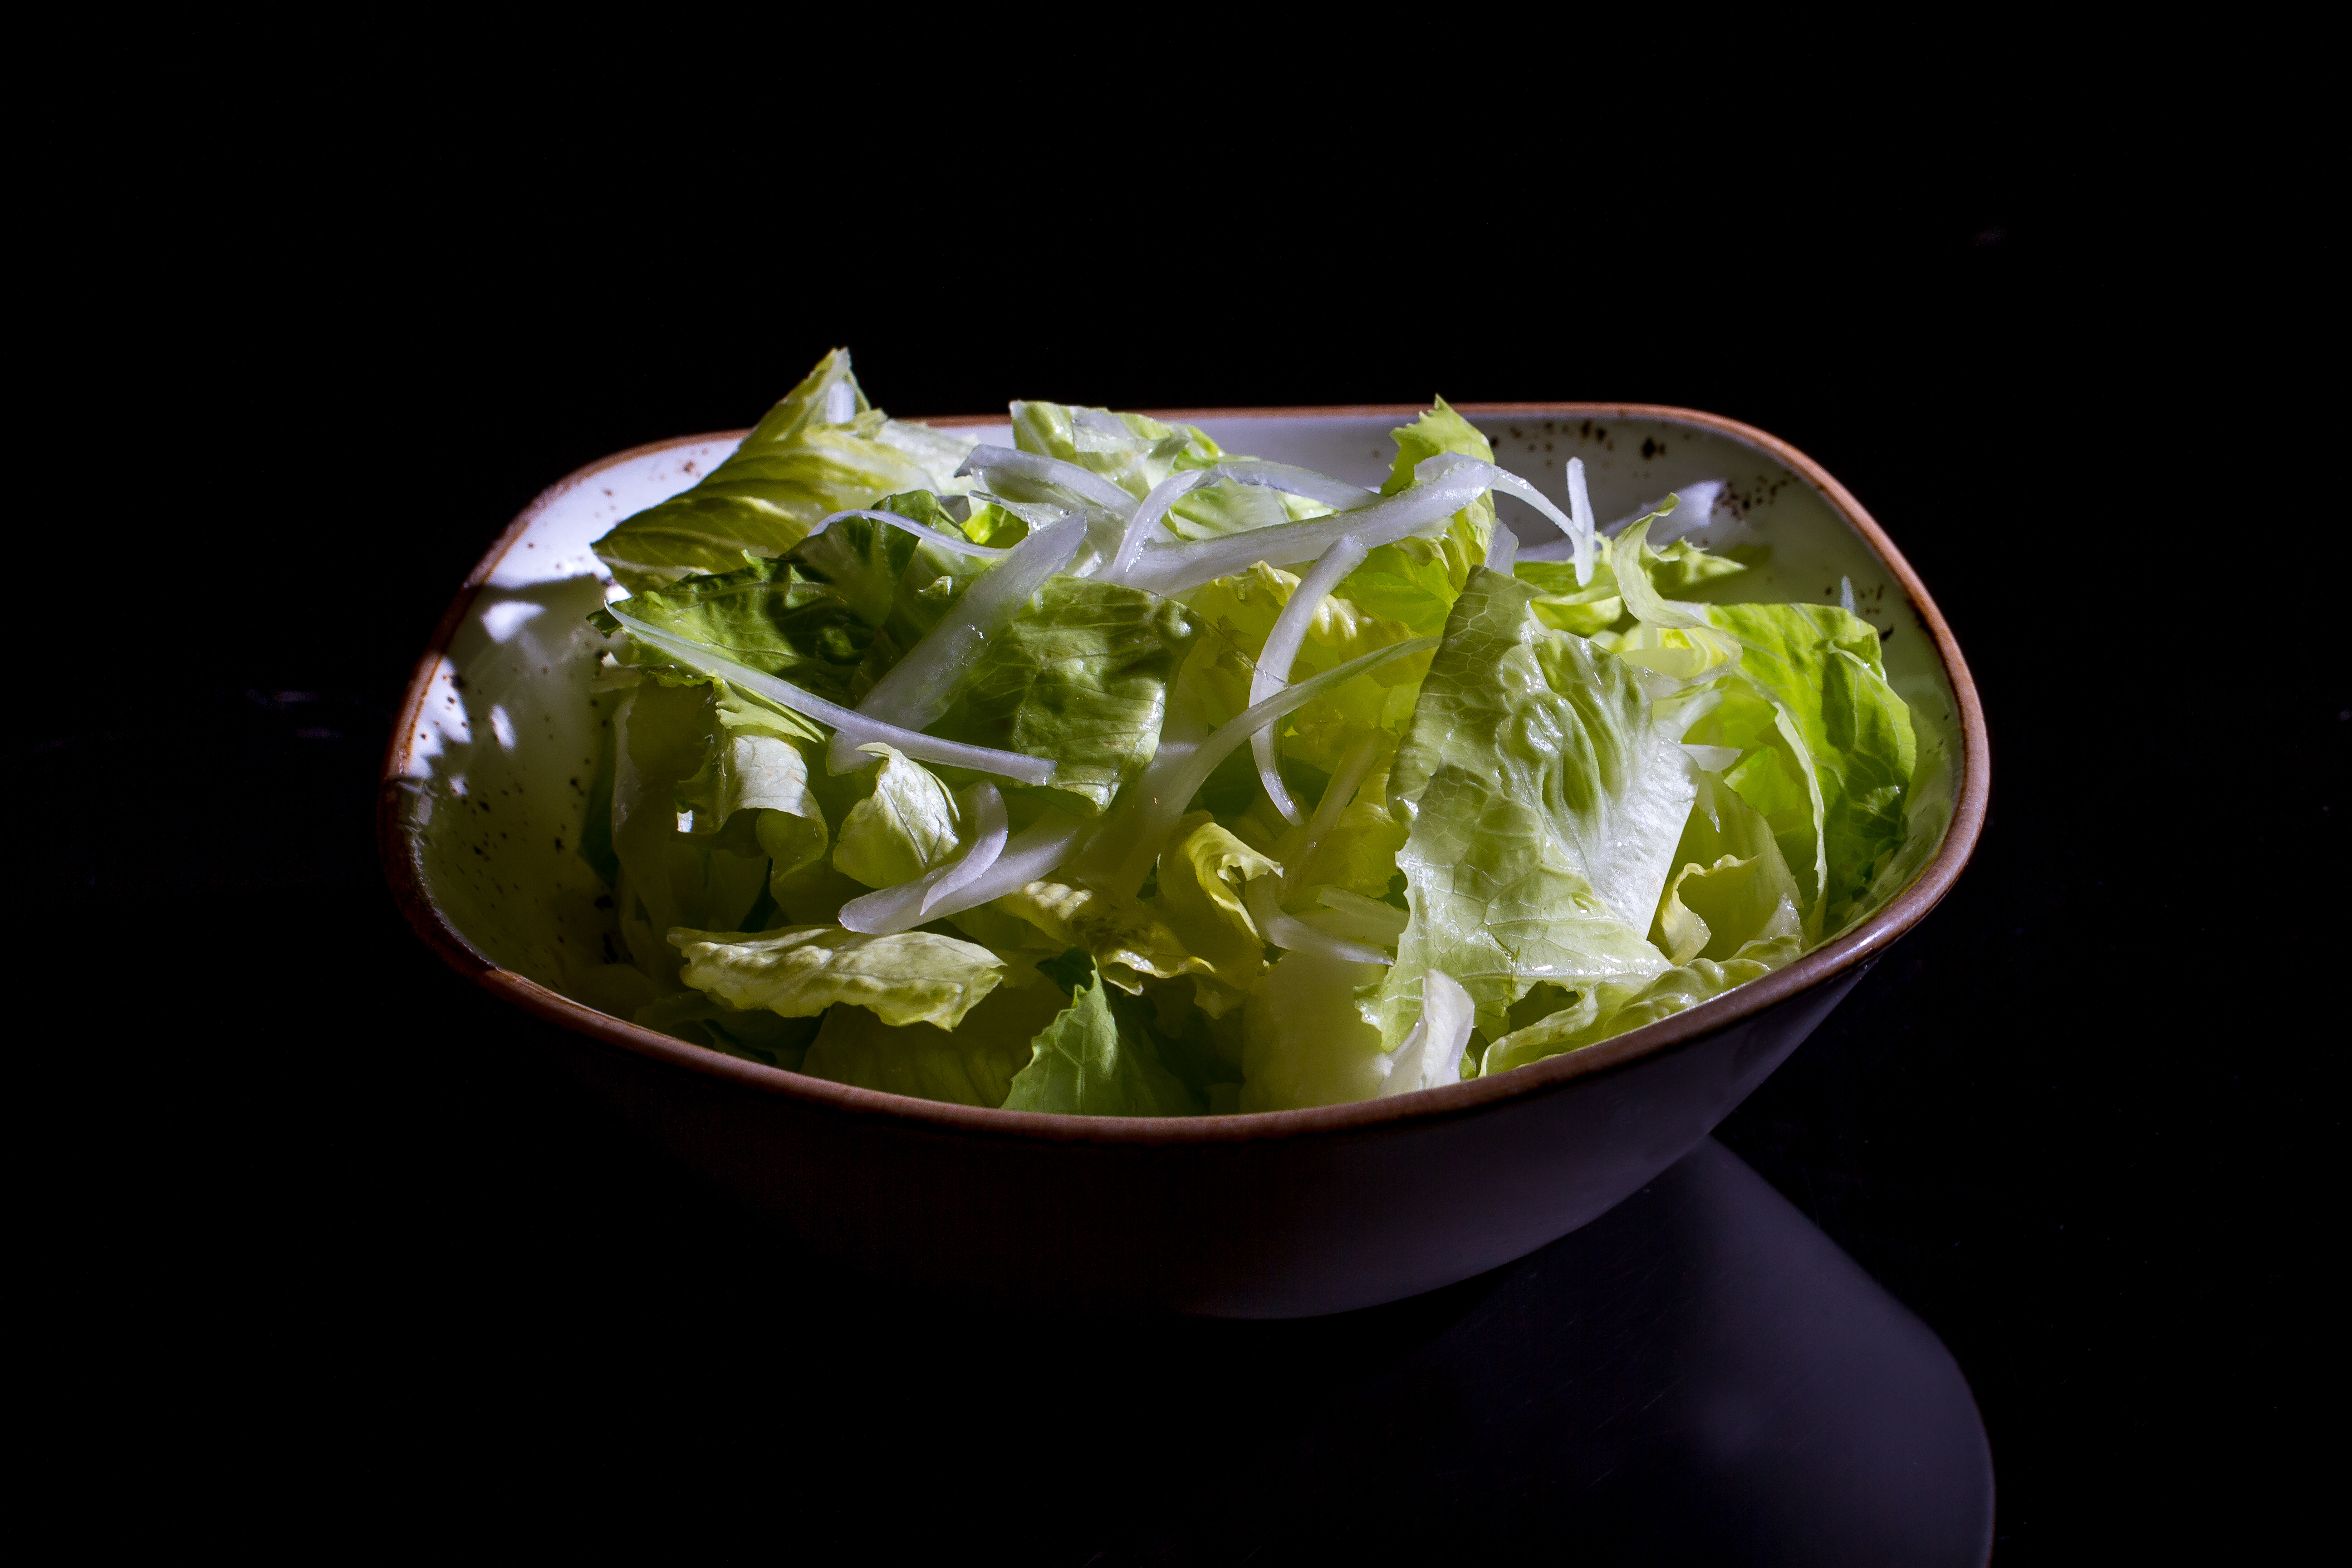 Green salad (lettuce, onion and garlic vinaigrette)